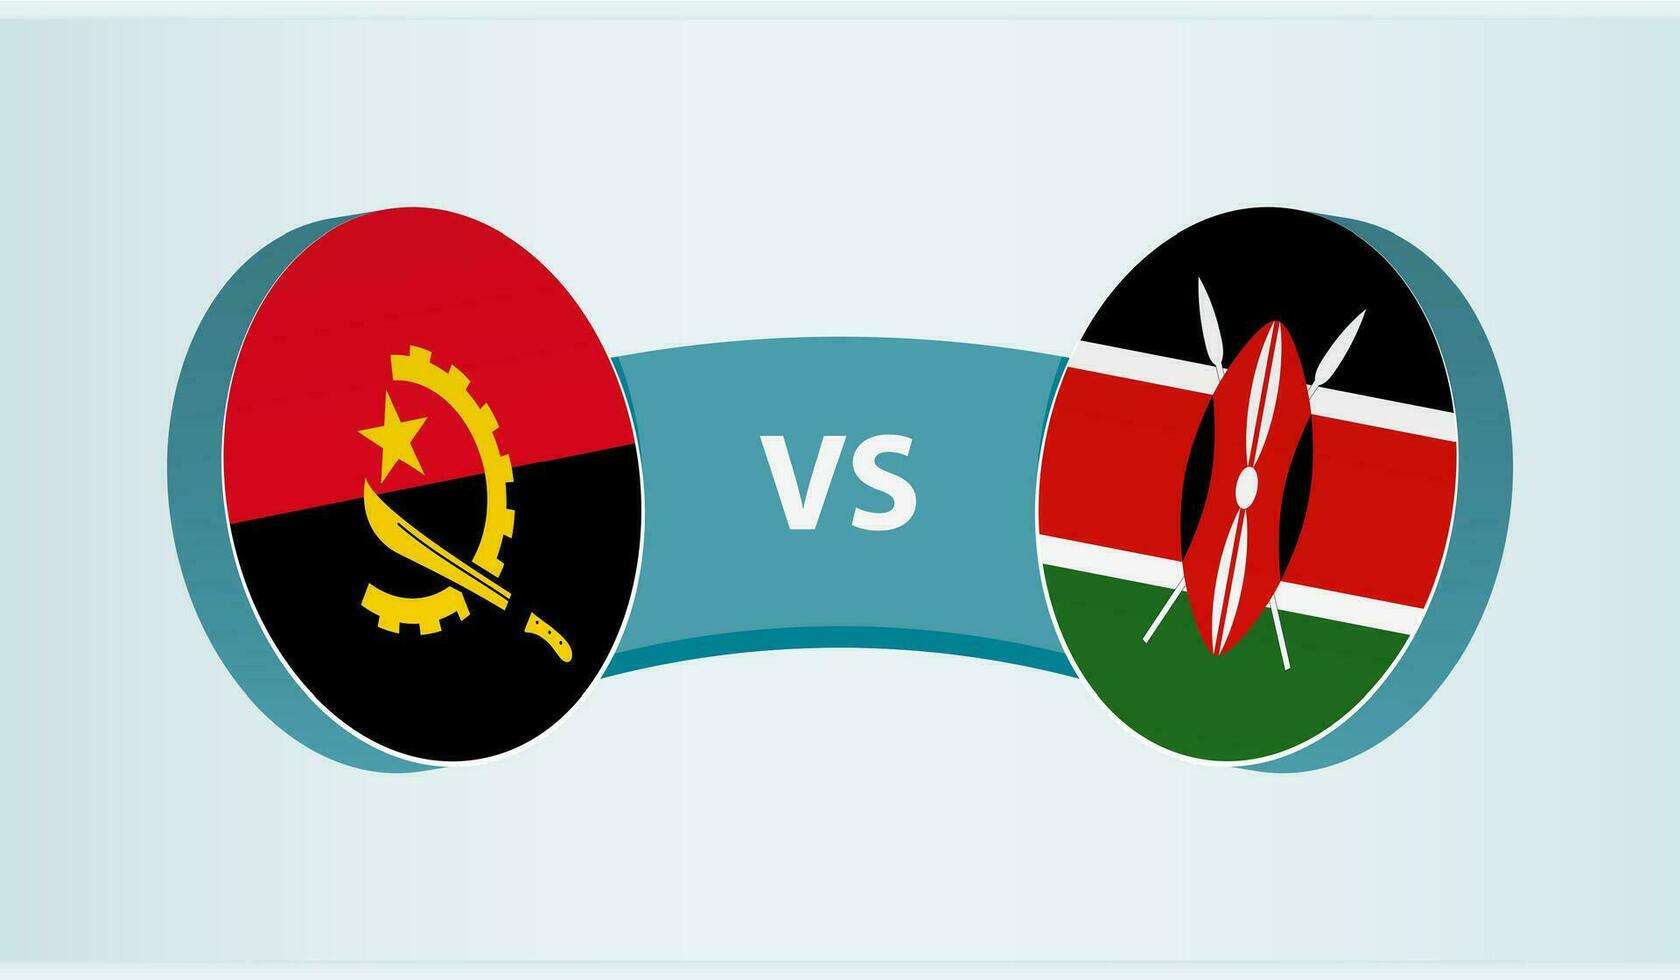 Angola versus Kenya, team sports competition concept. vector